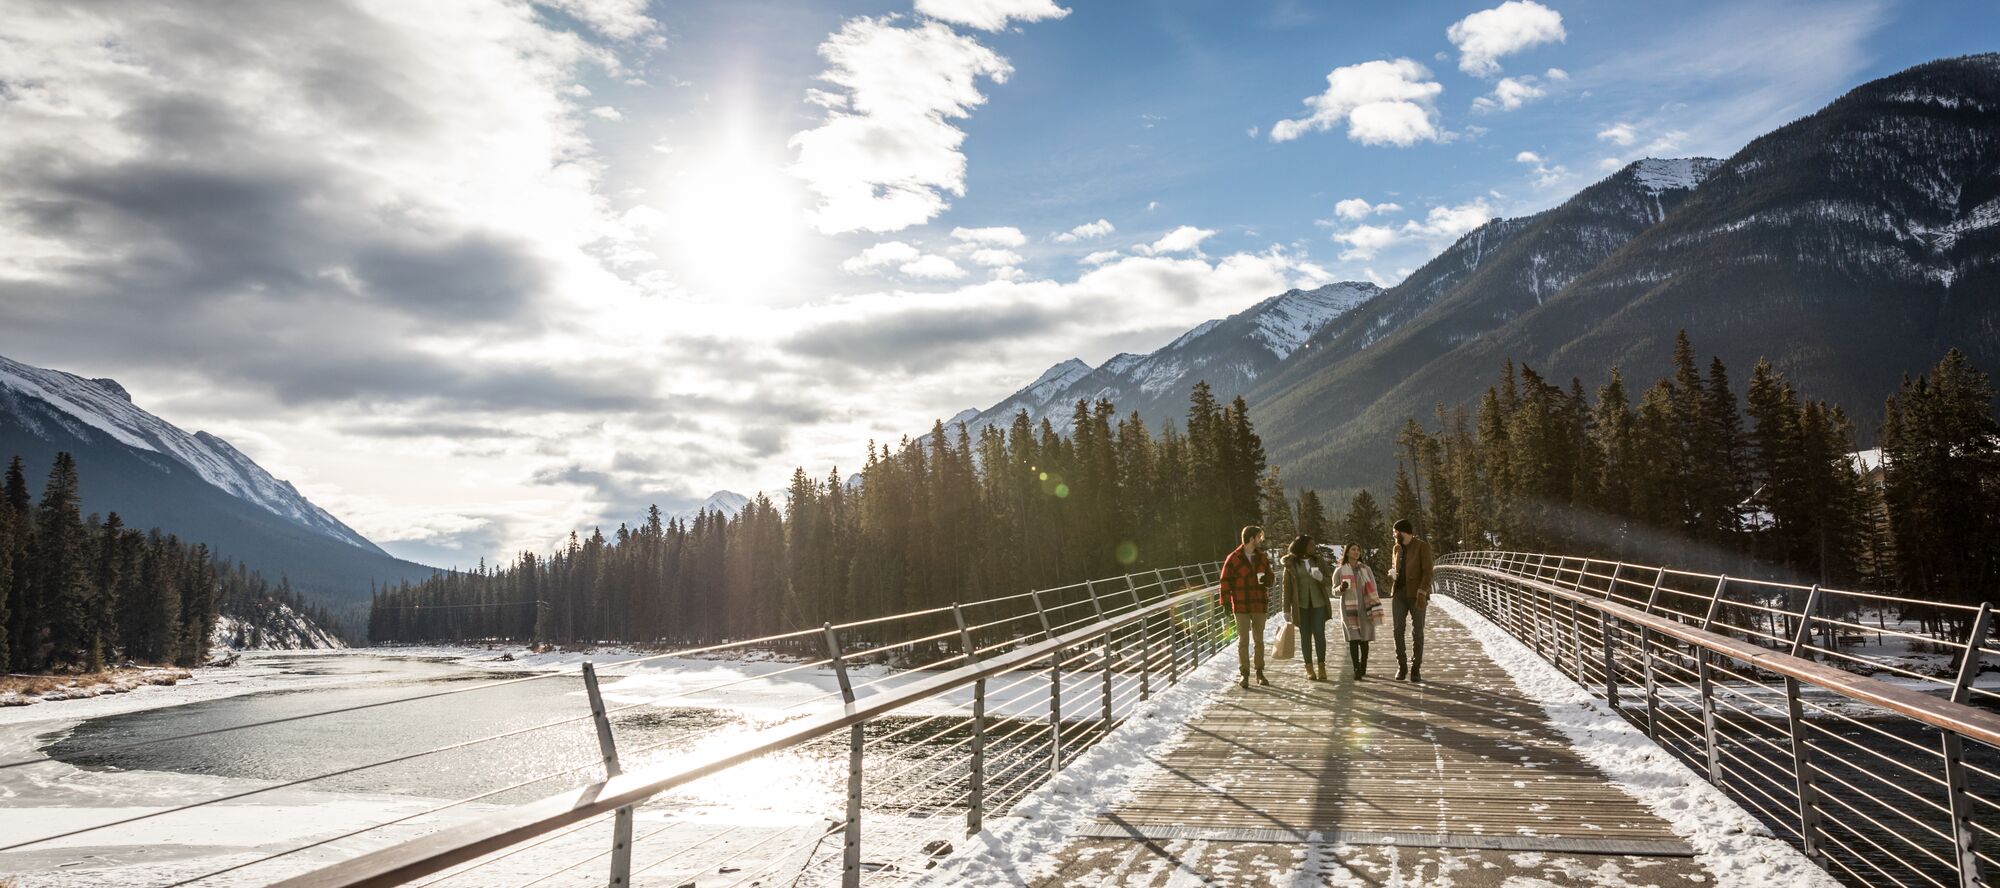 Four friends walk across the Banff Pedestrian Bridge over Bow River in Banff National Park